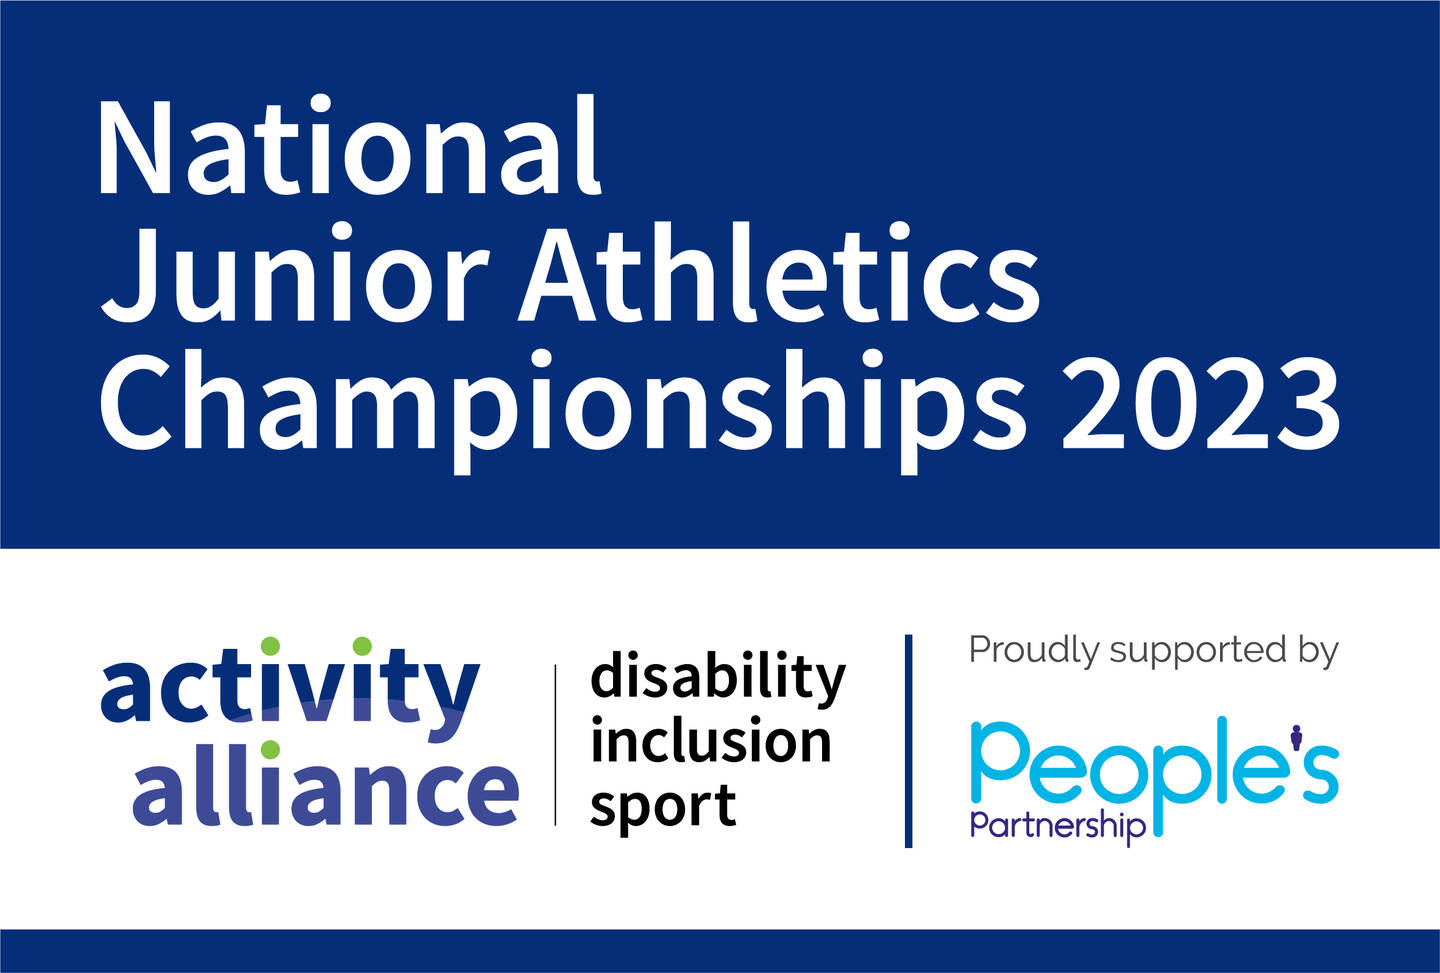 National Junior Athletics Championships 2023 event logo